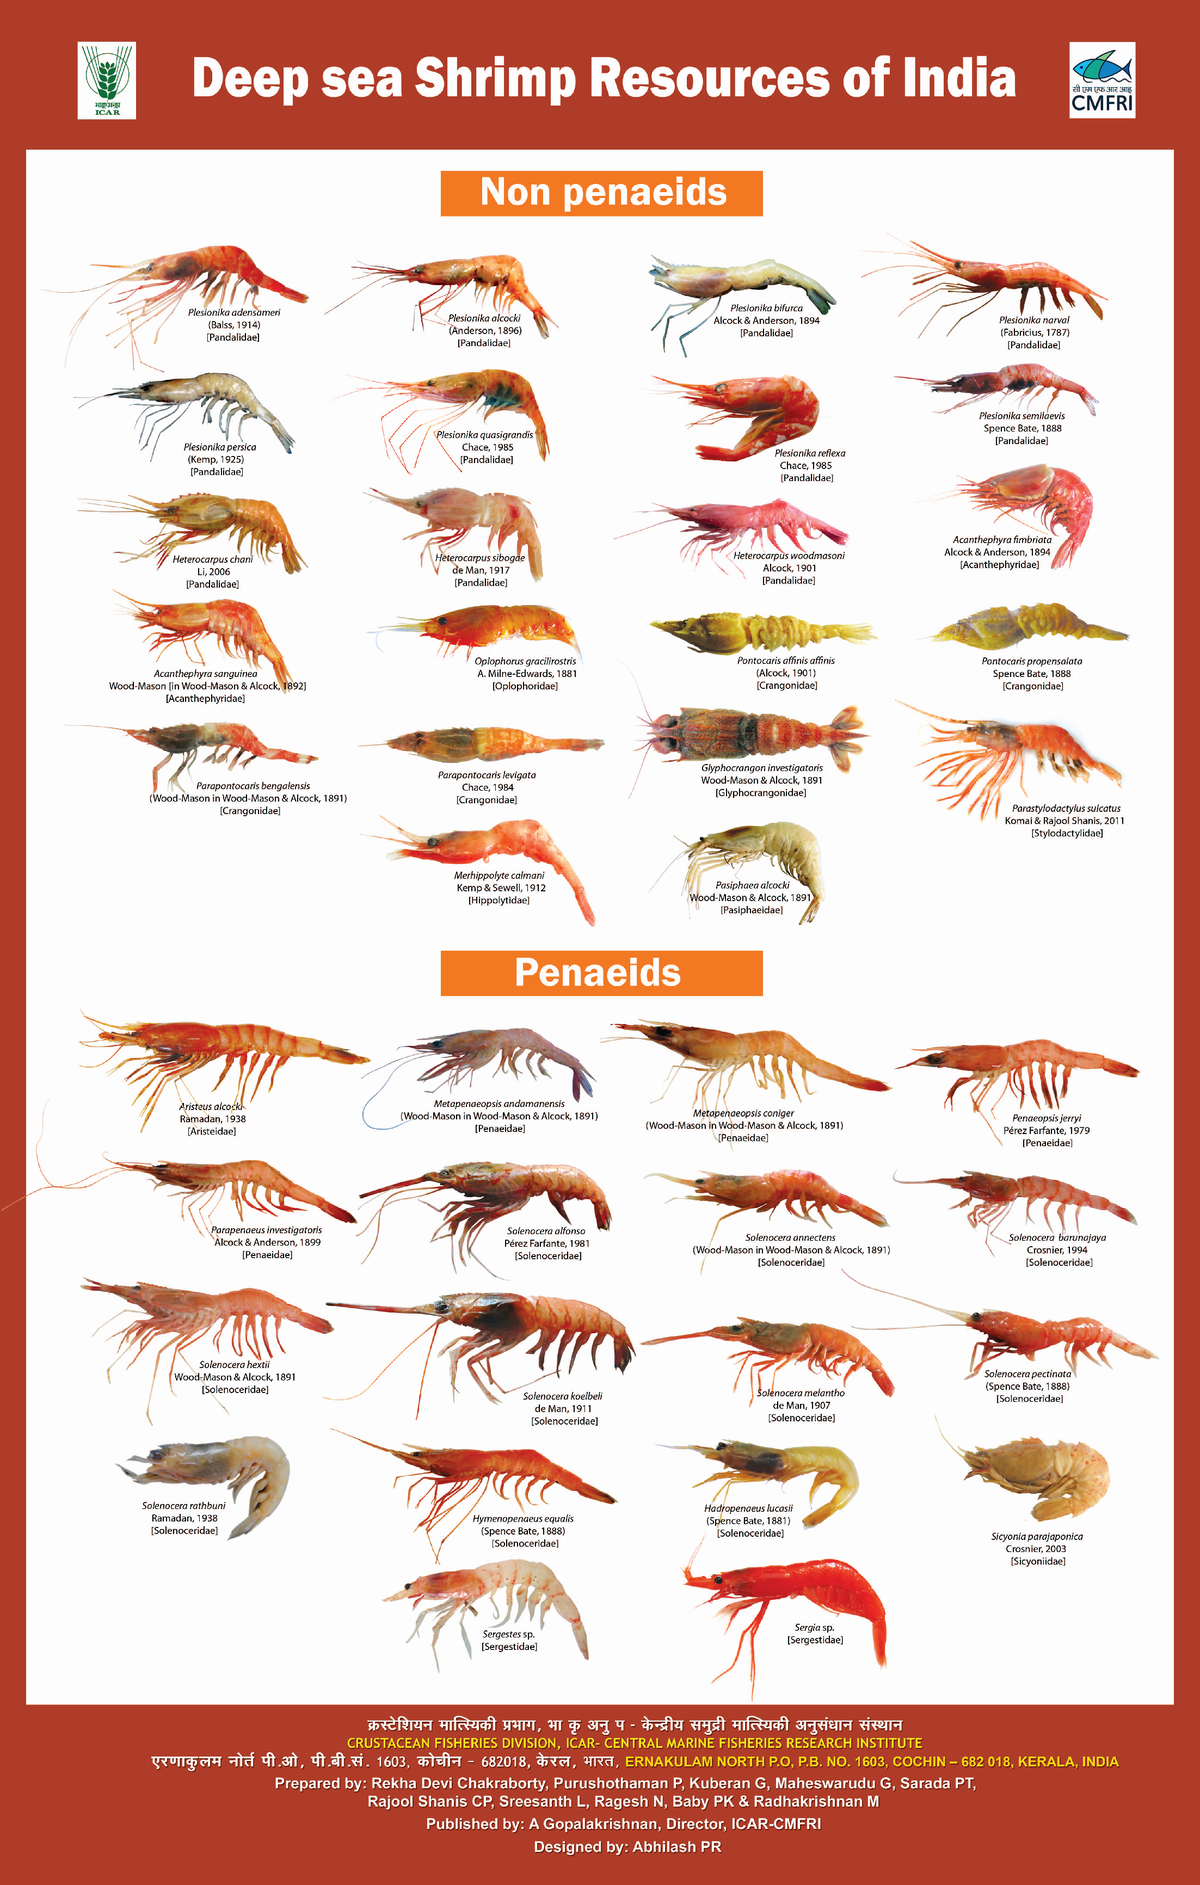 Deep Sea Shrimp Resources of India Poster - Marine Bilogy - StuDocu